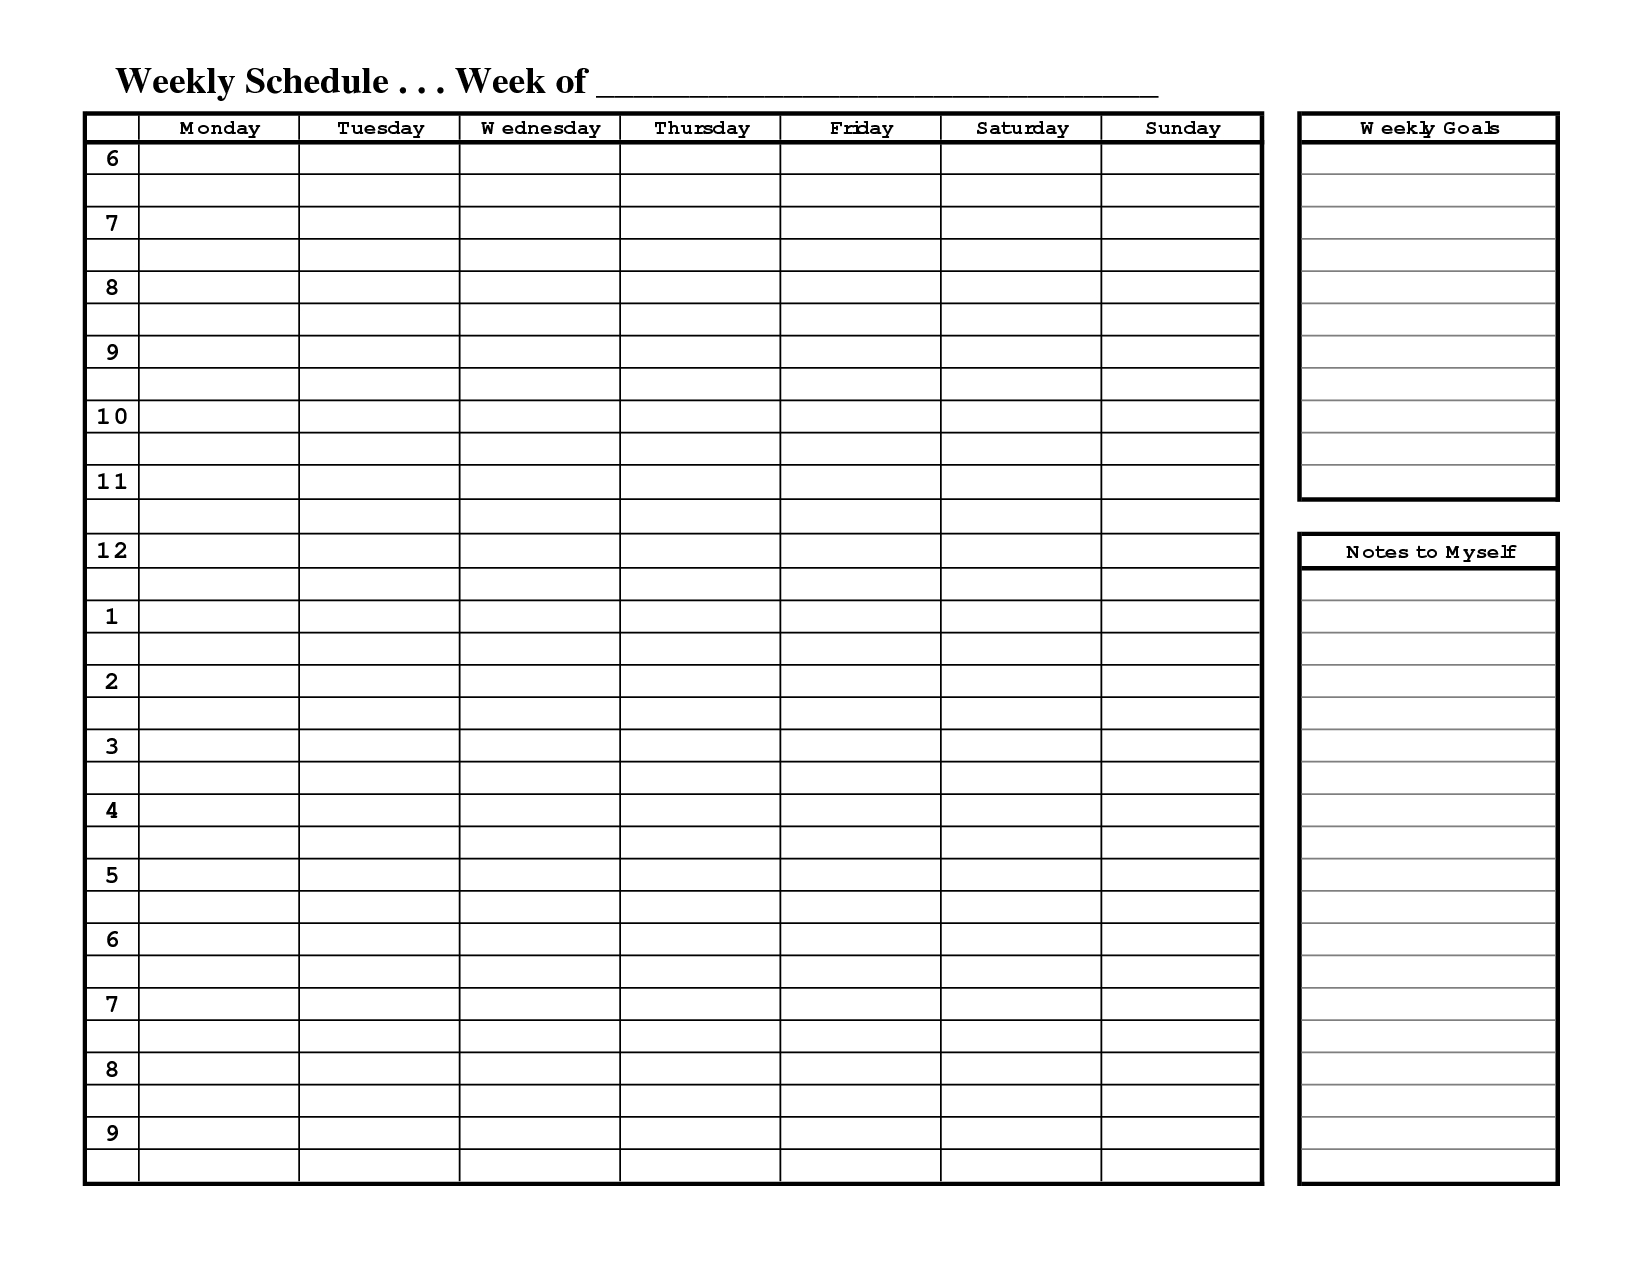 Free Printable Weekly Schedule Template | Organize My Life - Free Printable Weekly Schedule